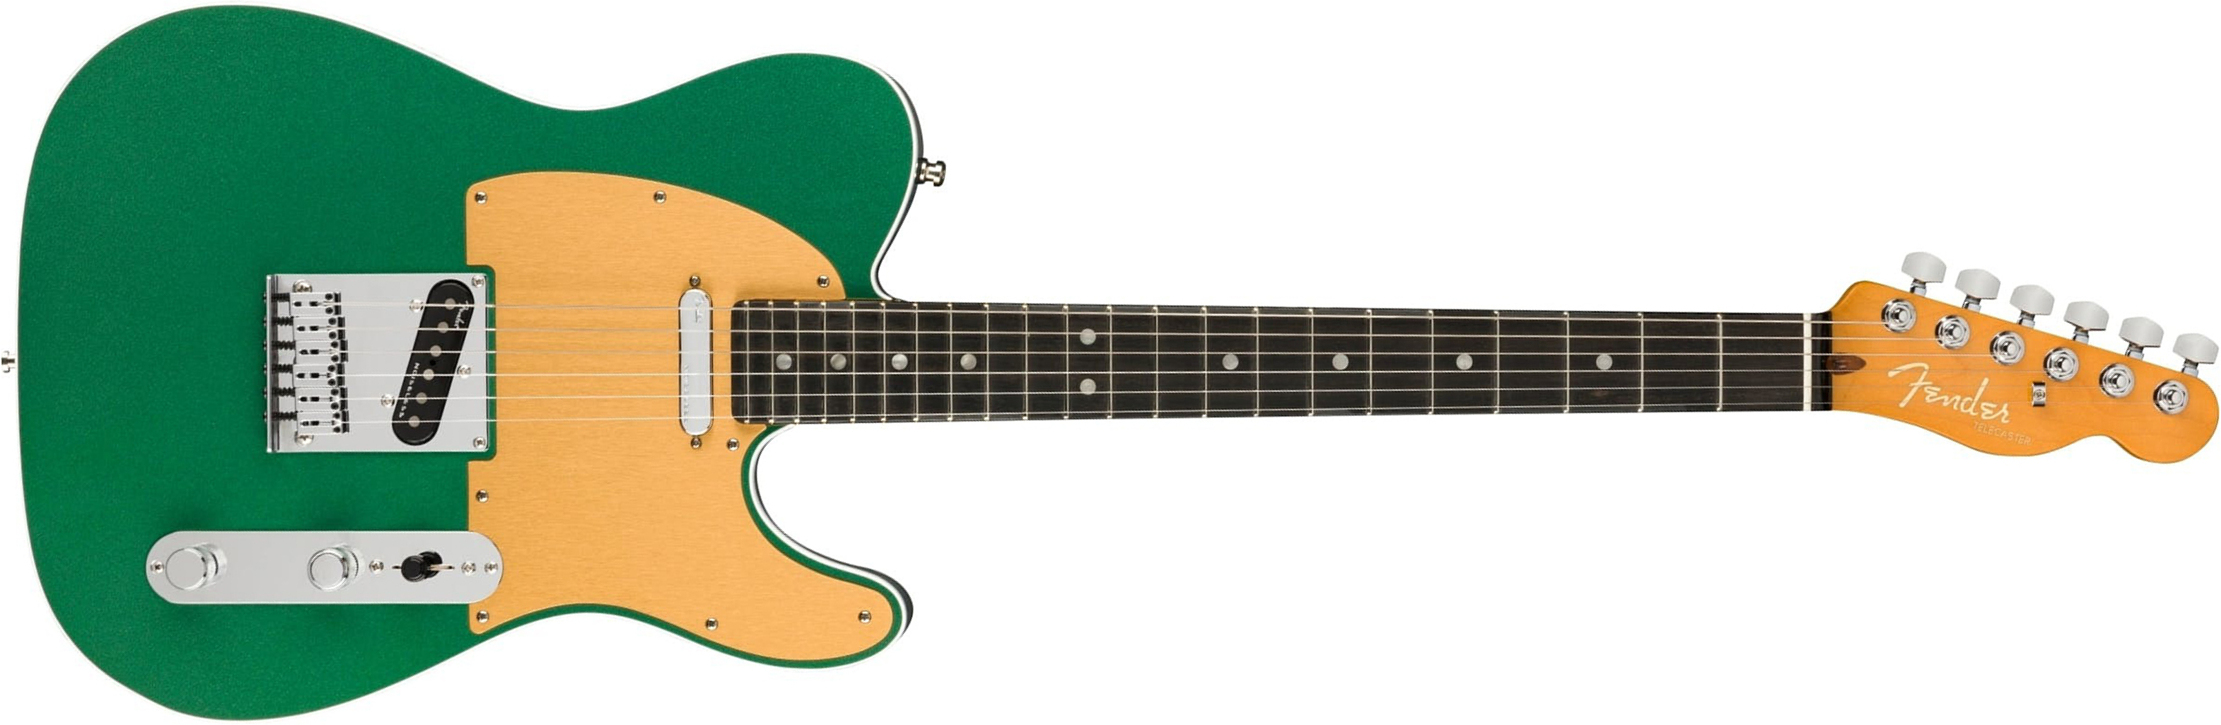 Fender Tele American Ultra Fsr Ltd Usa 2s Ht Eb - Mystic Pine Green - Televorm elektrische gitaar - Main picture